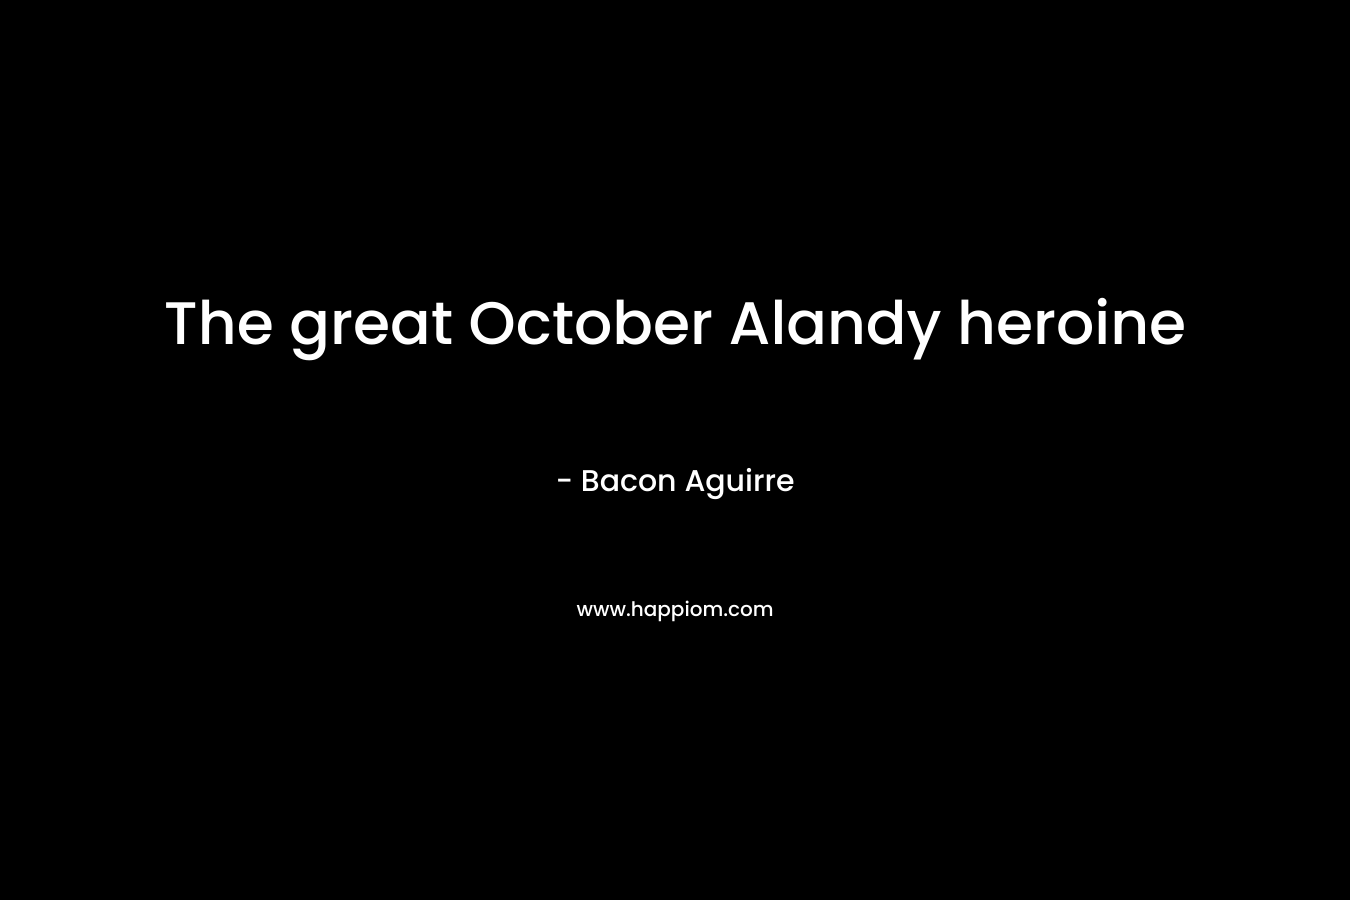 The great October Alandy heroine